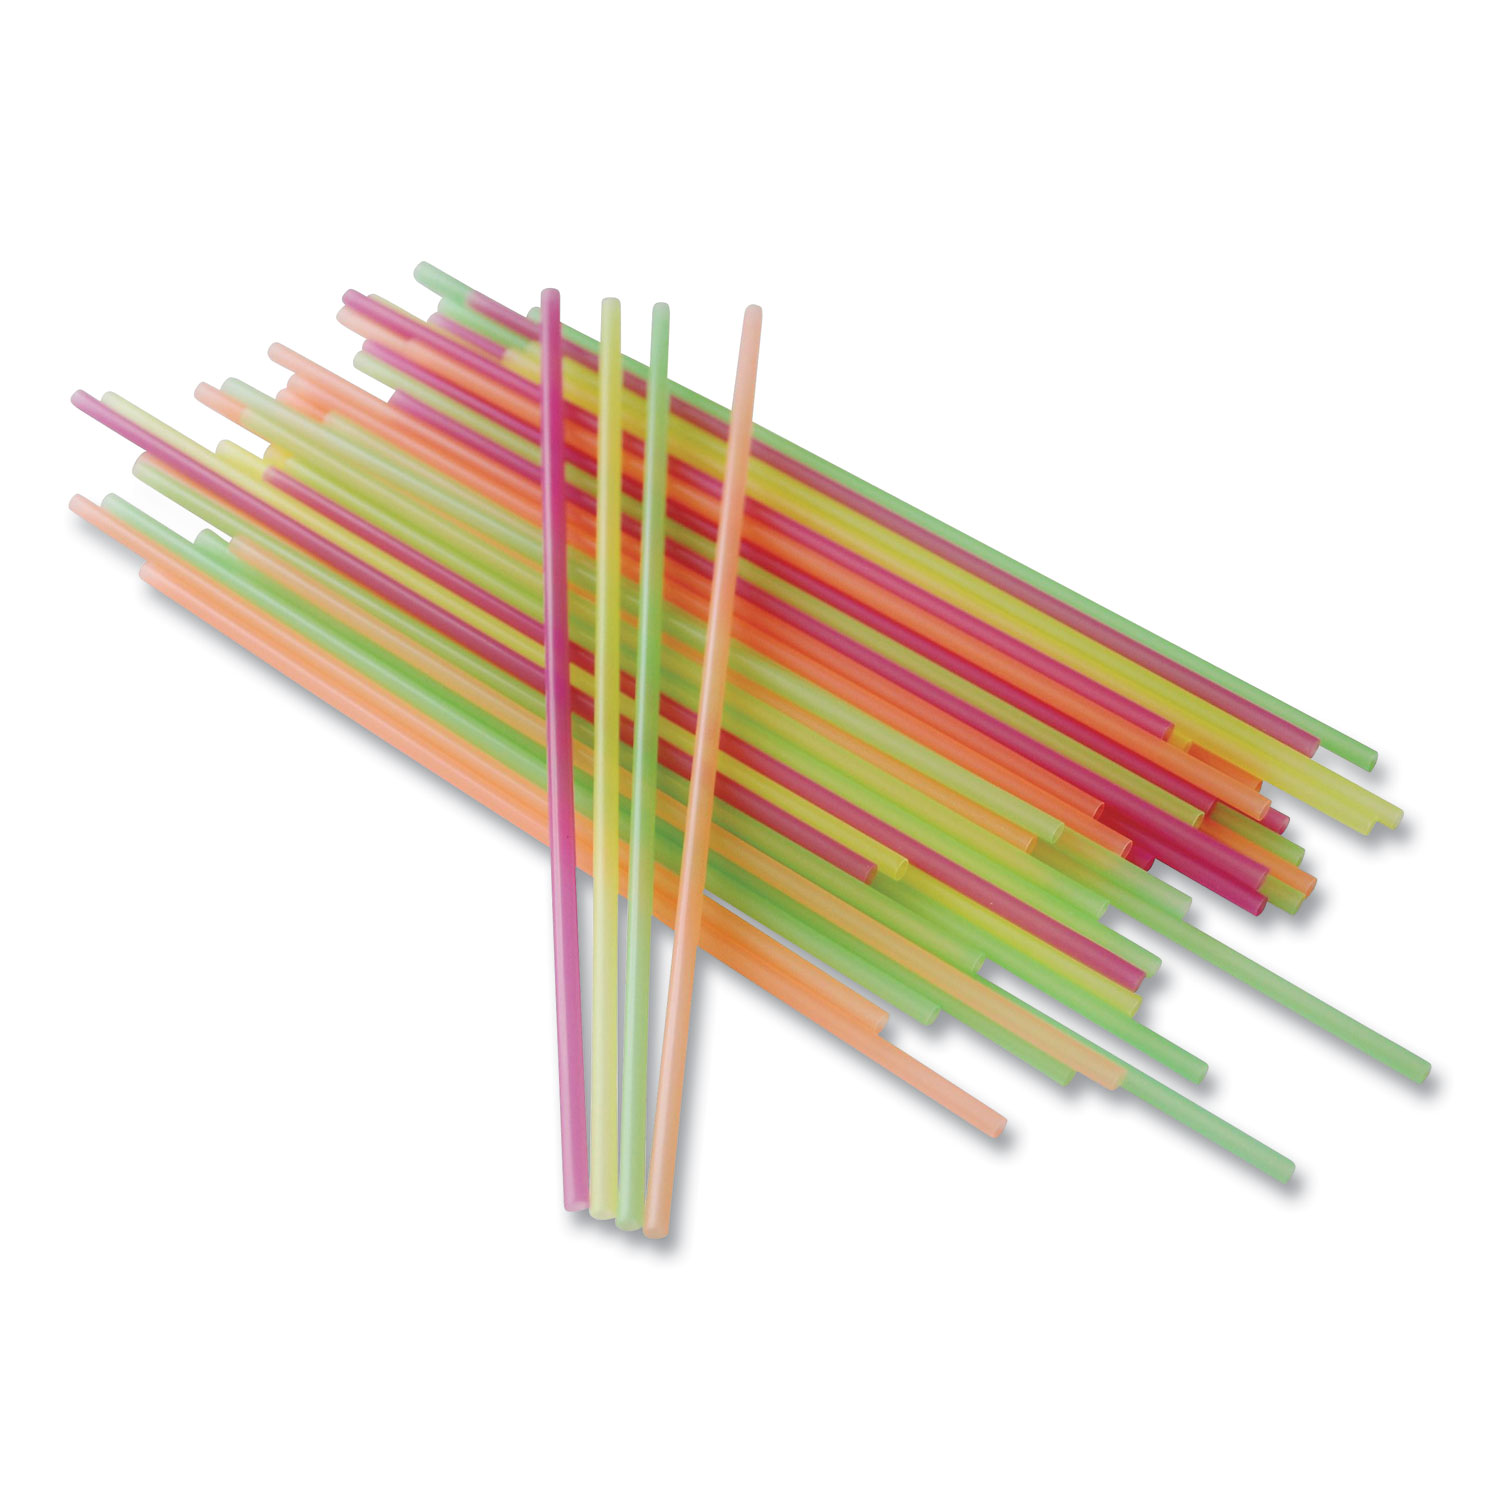  Berkley Square 1241202 Neon Sip Sticks, 5.5, Assorted, 1,000/Pack (BSQ778661) 